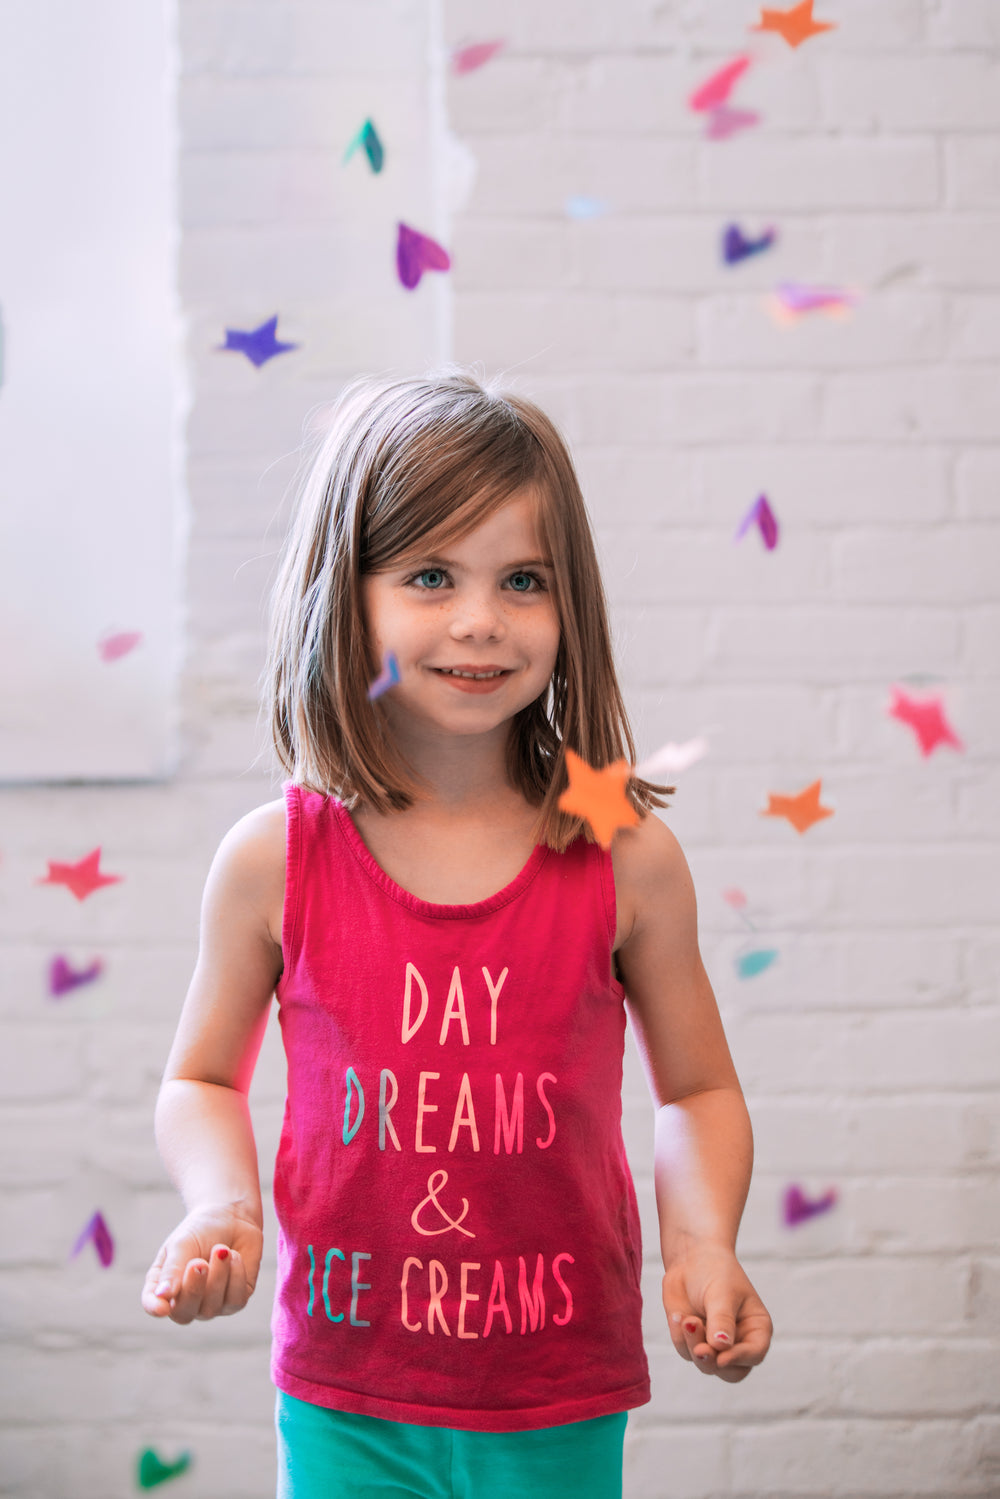 daydream girl with confetti